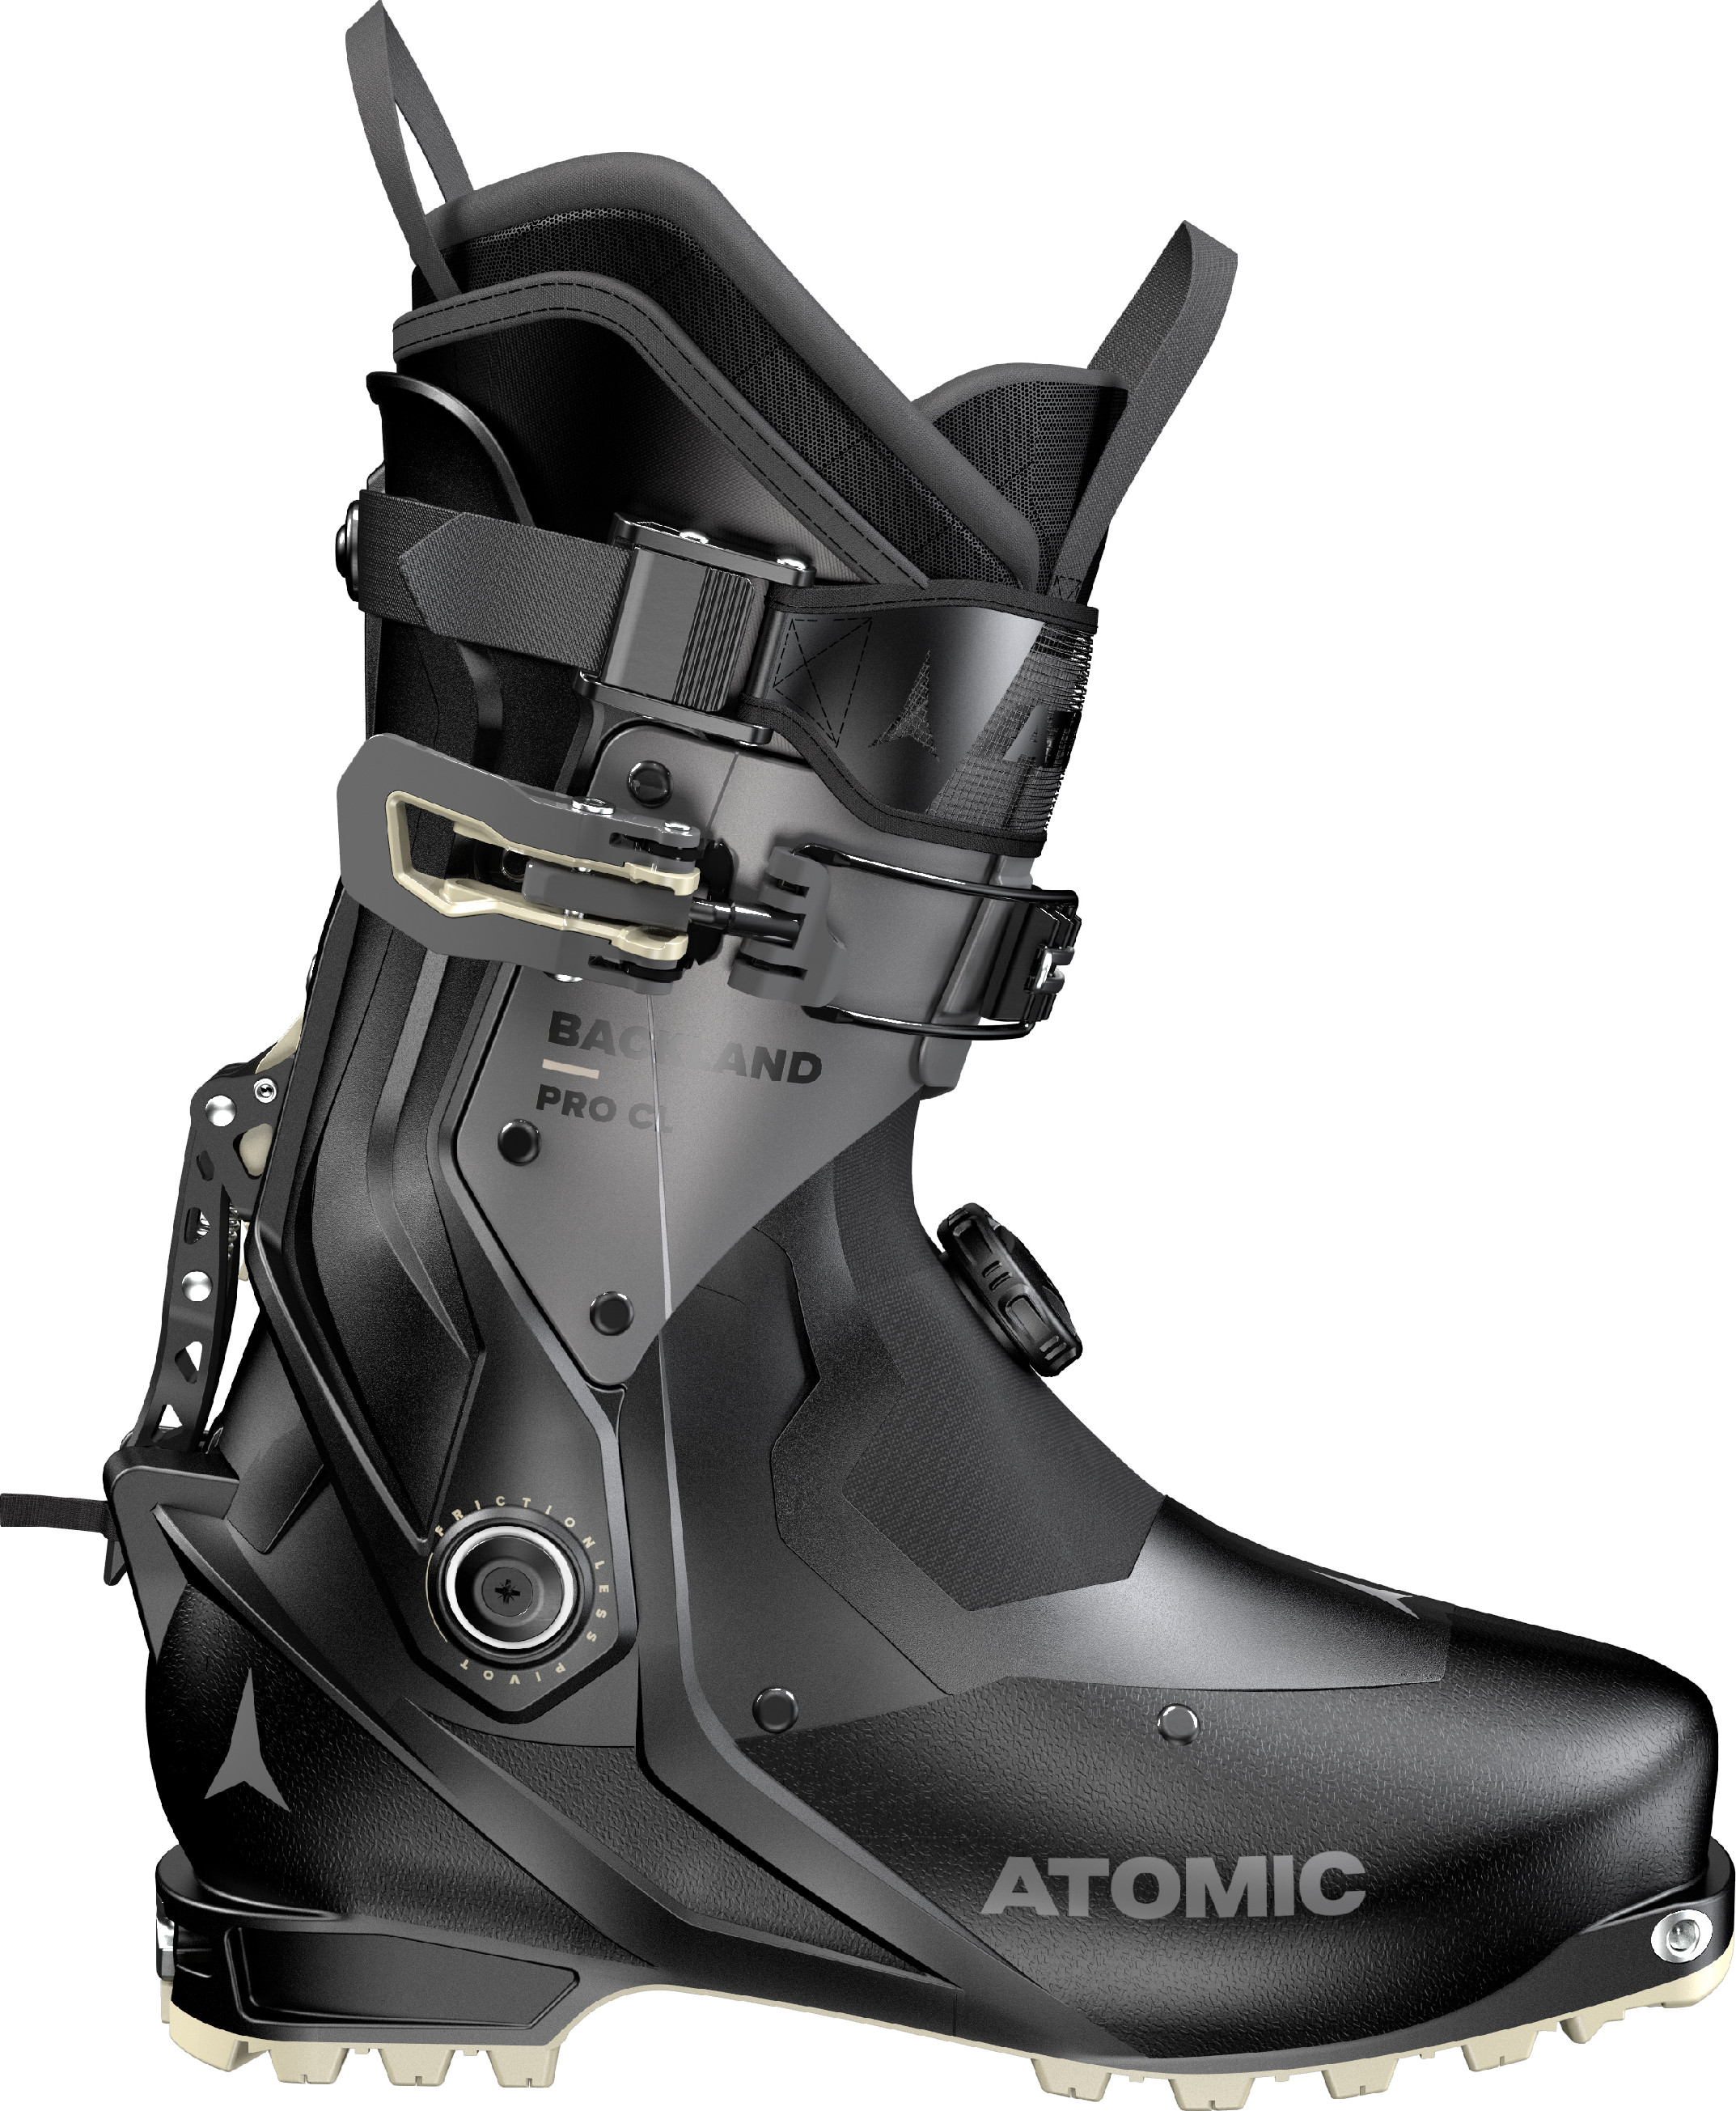 Atomic Backland Pro CL Uni Black/Anthracite/San 21/22 Velikost: 28/28,5